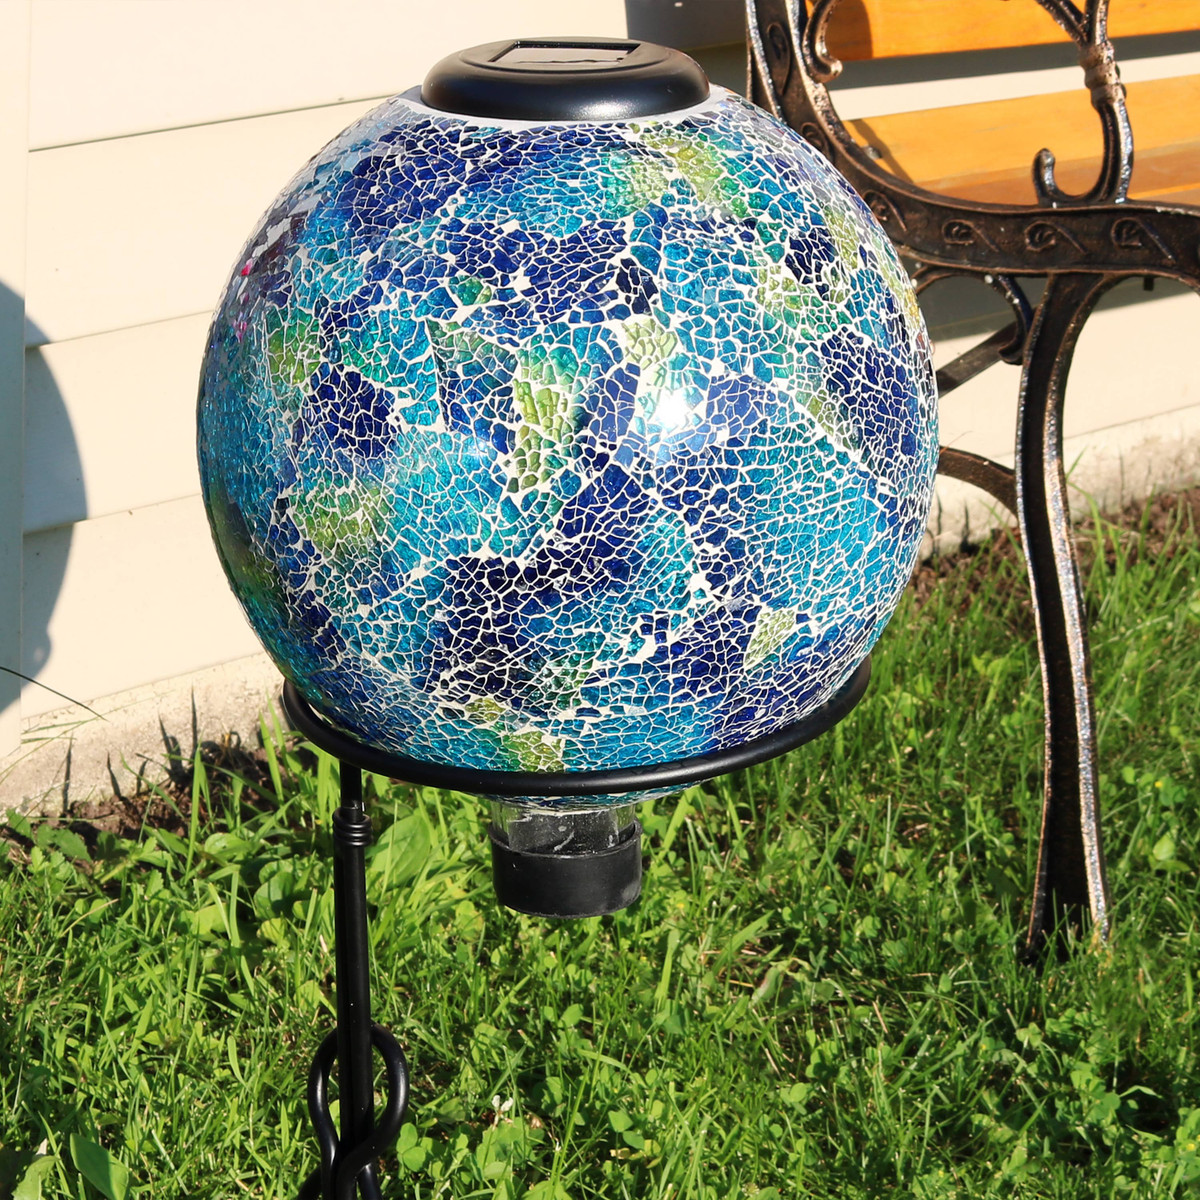 Sunnydaze Azul Terra Glass Mosaic Garden Gazing Globe With Solar